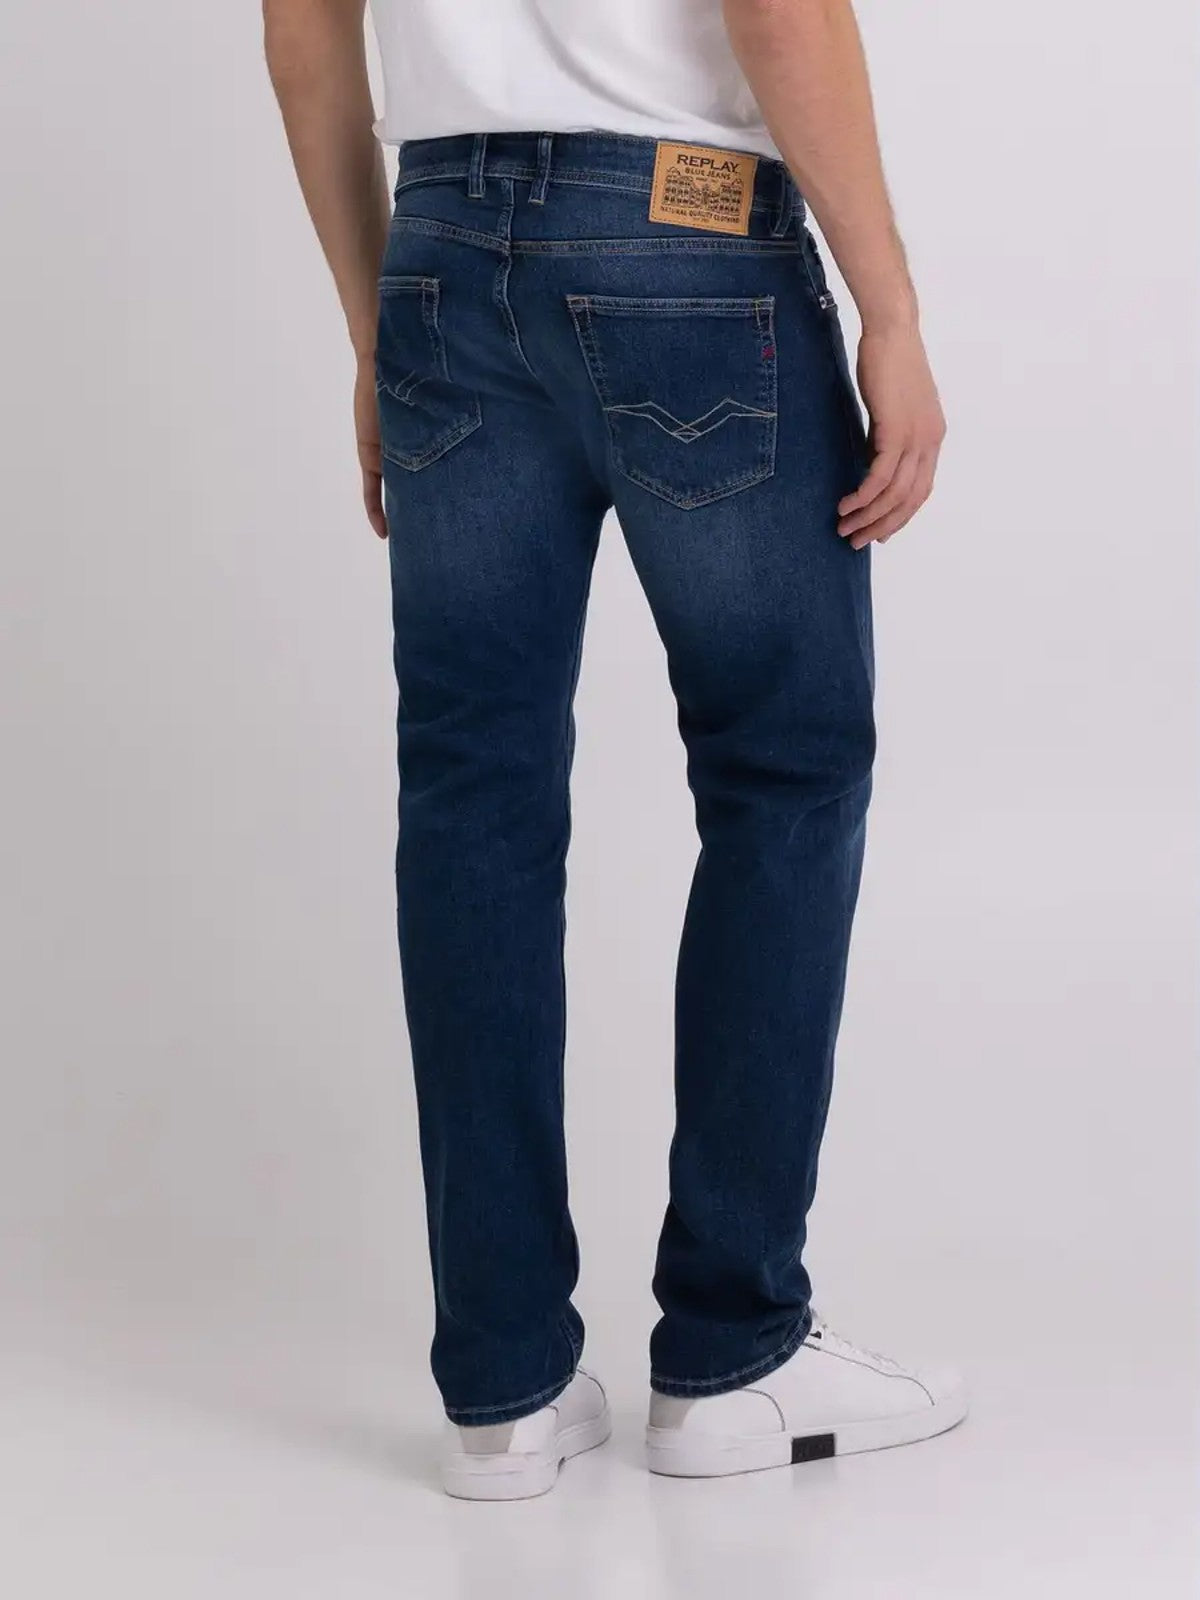 Grover Indigo Jeans